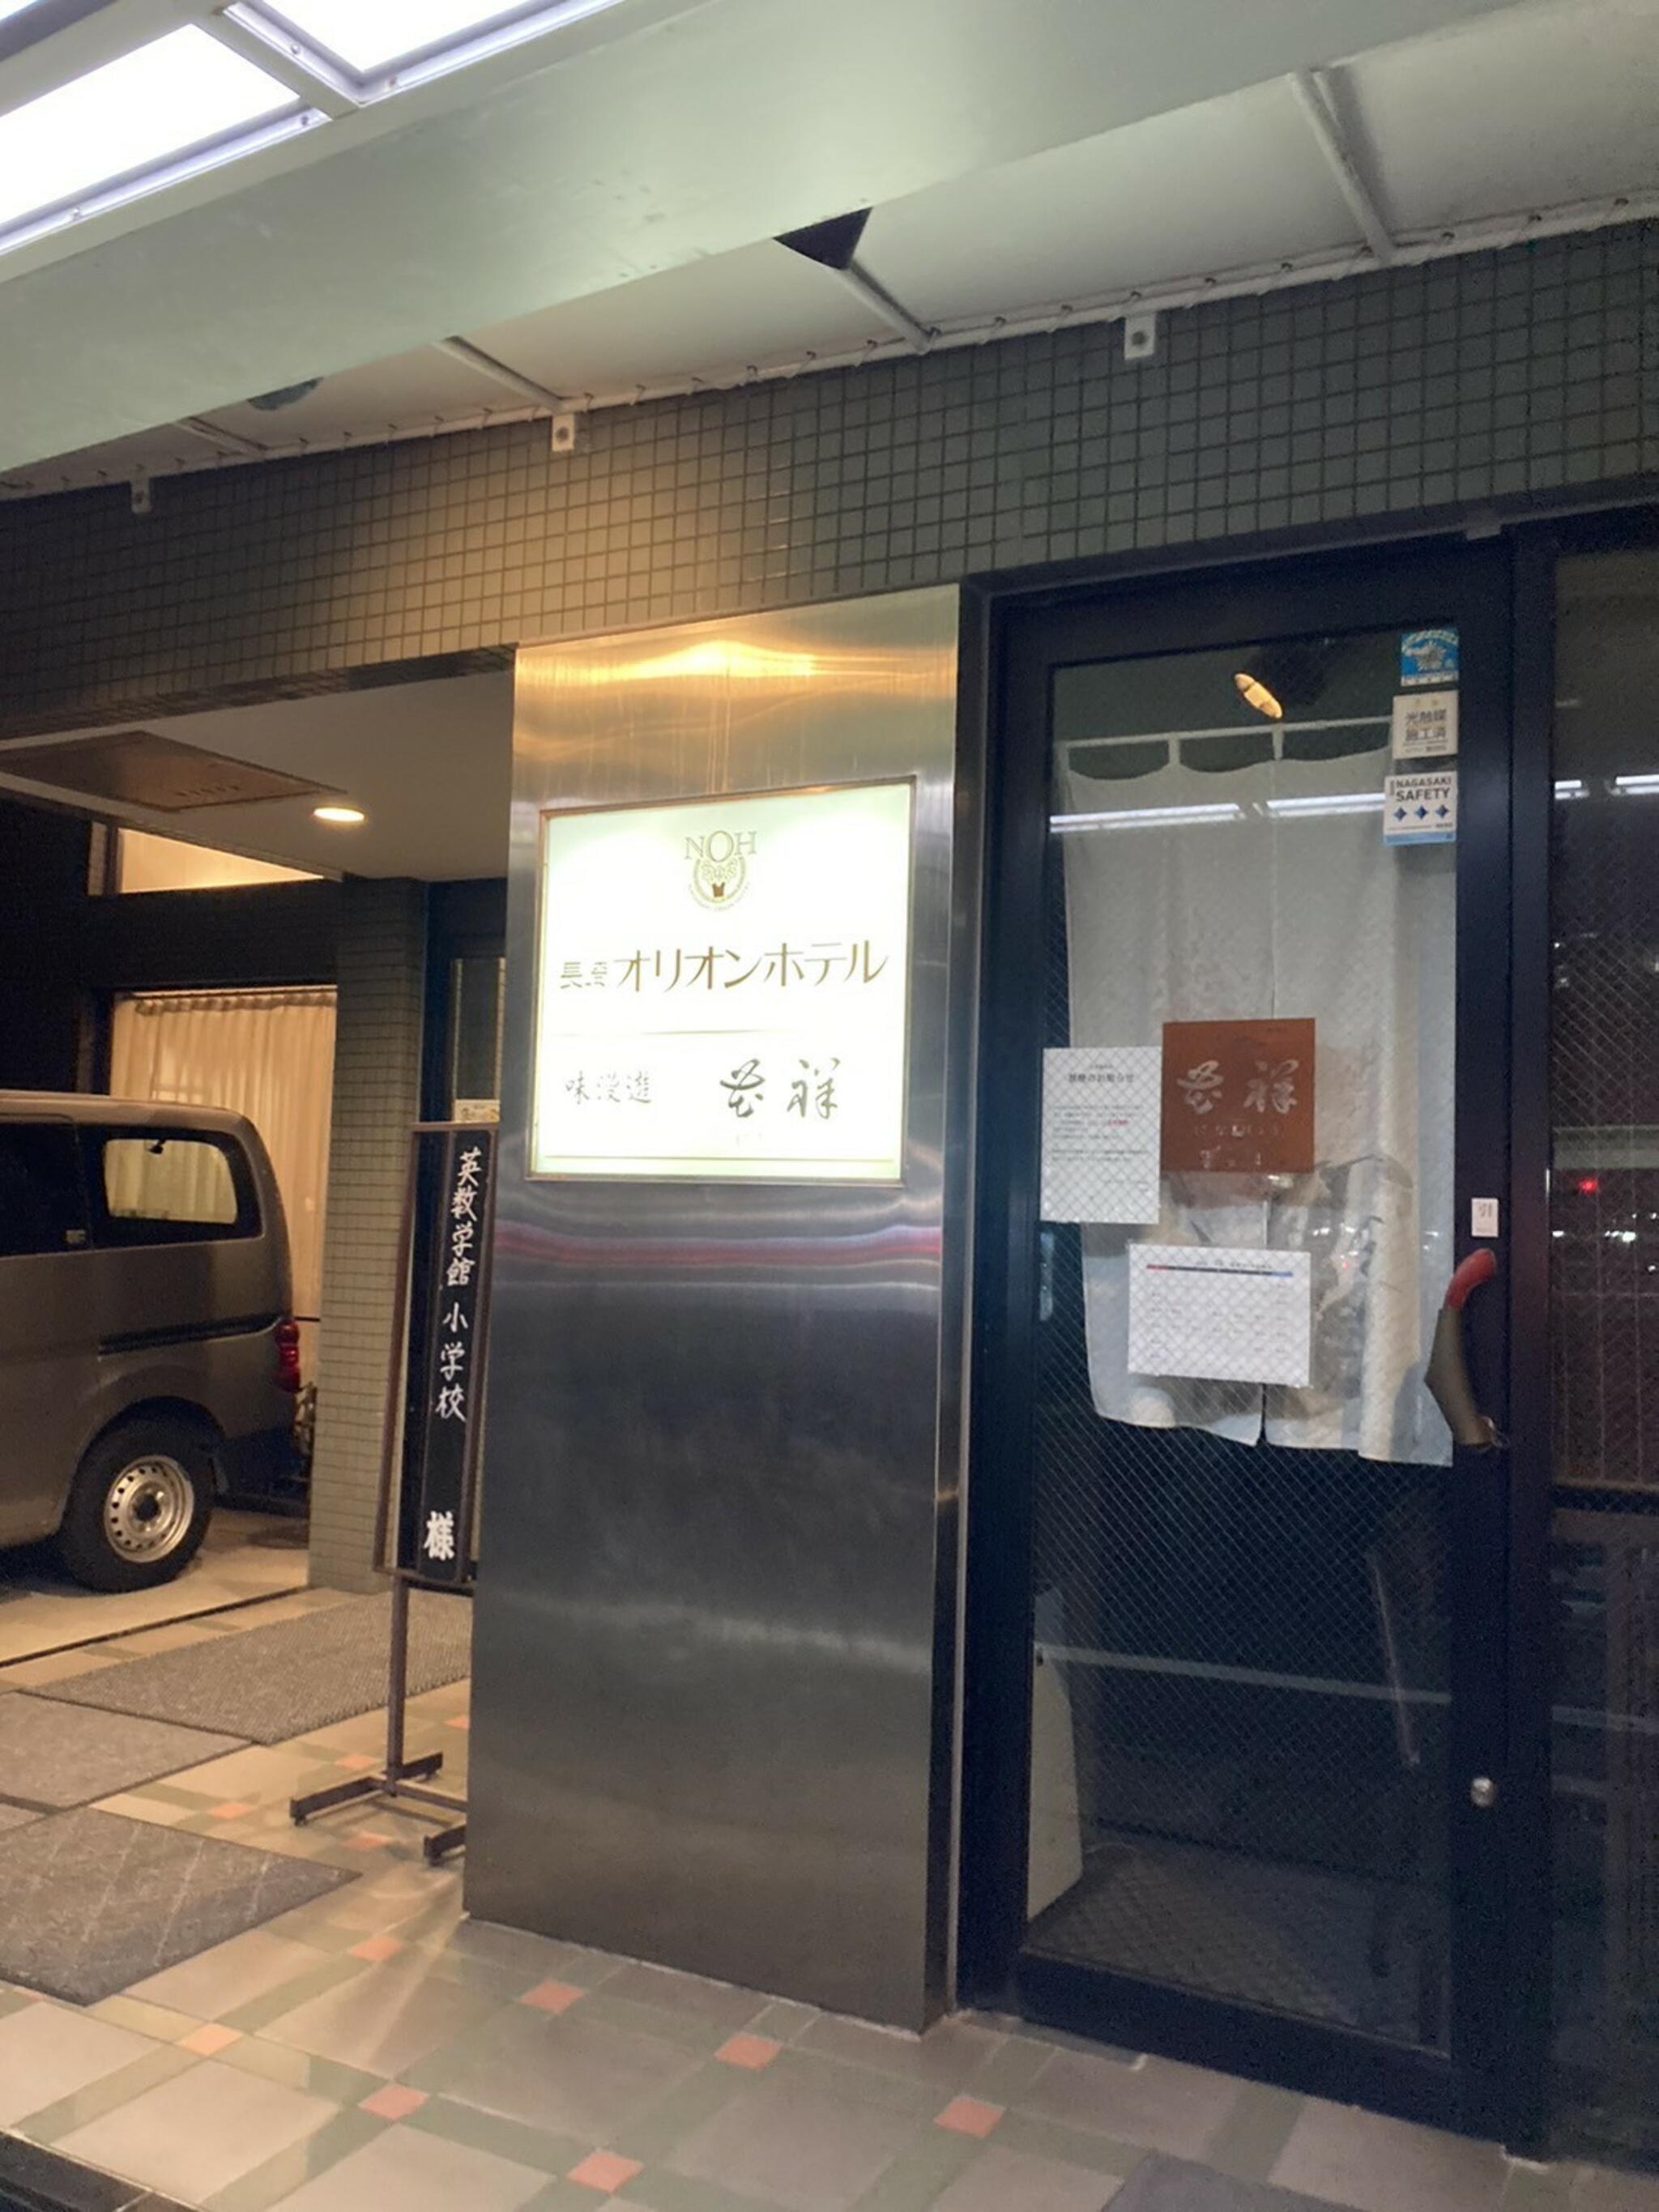 OYO 長崎オリオンホテル 長崎駅前の代表写真7